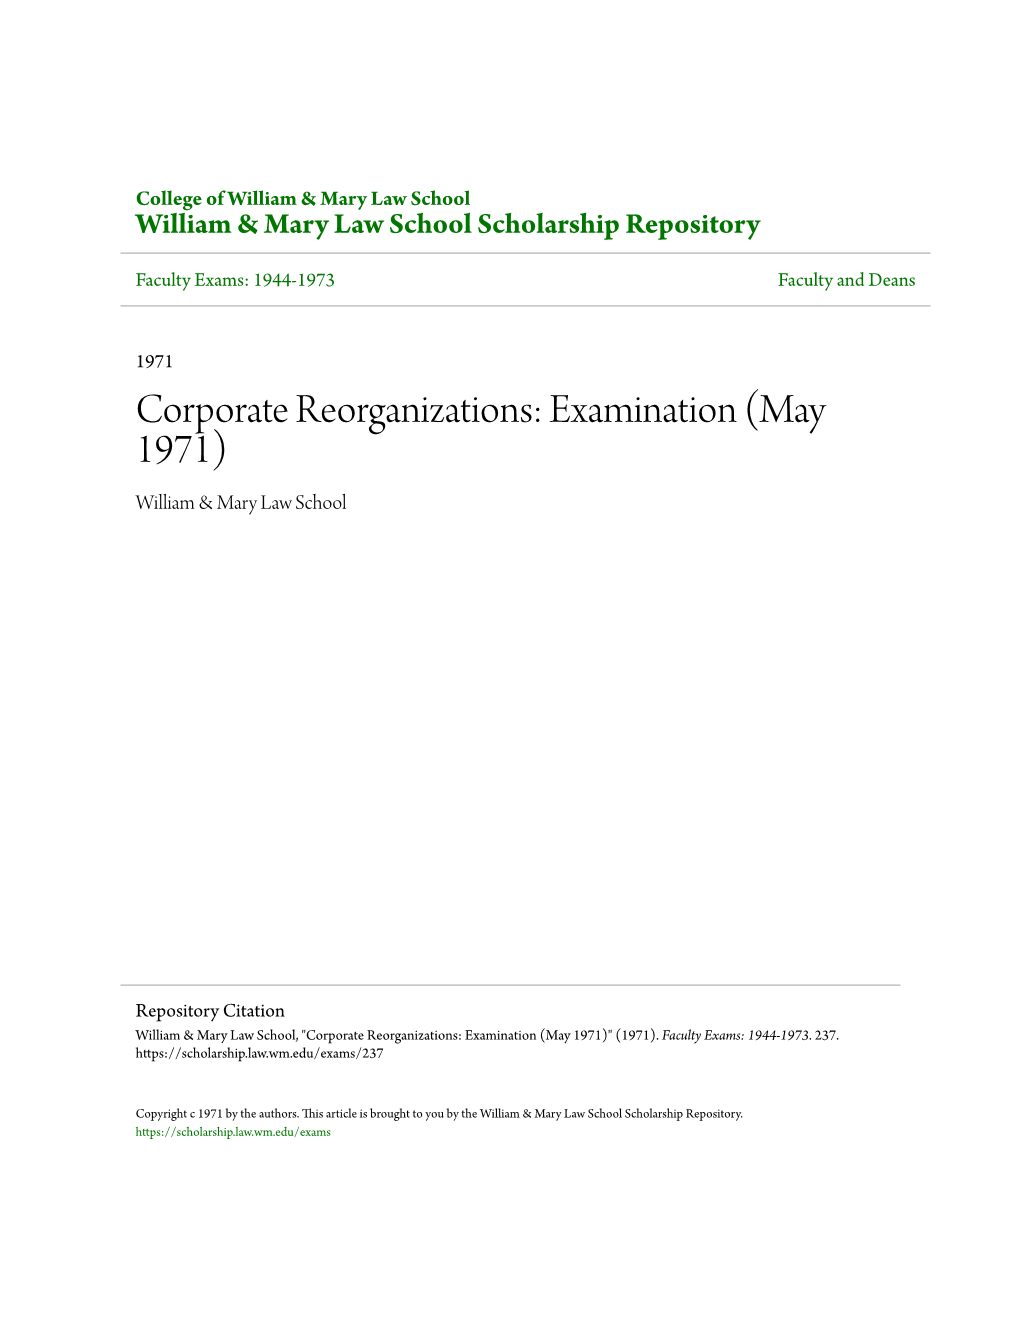 Corporate Reorganizations: Examination (May 1971) William & Mary Law School